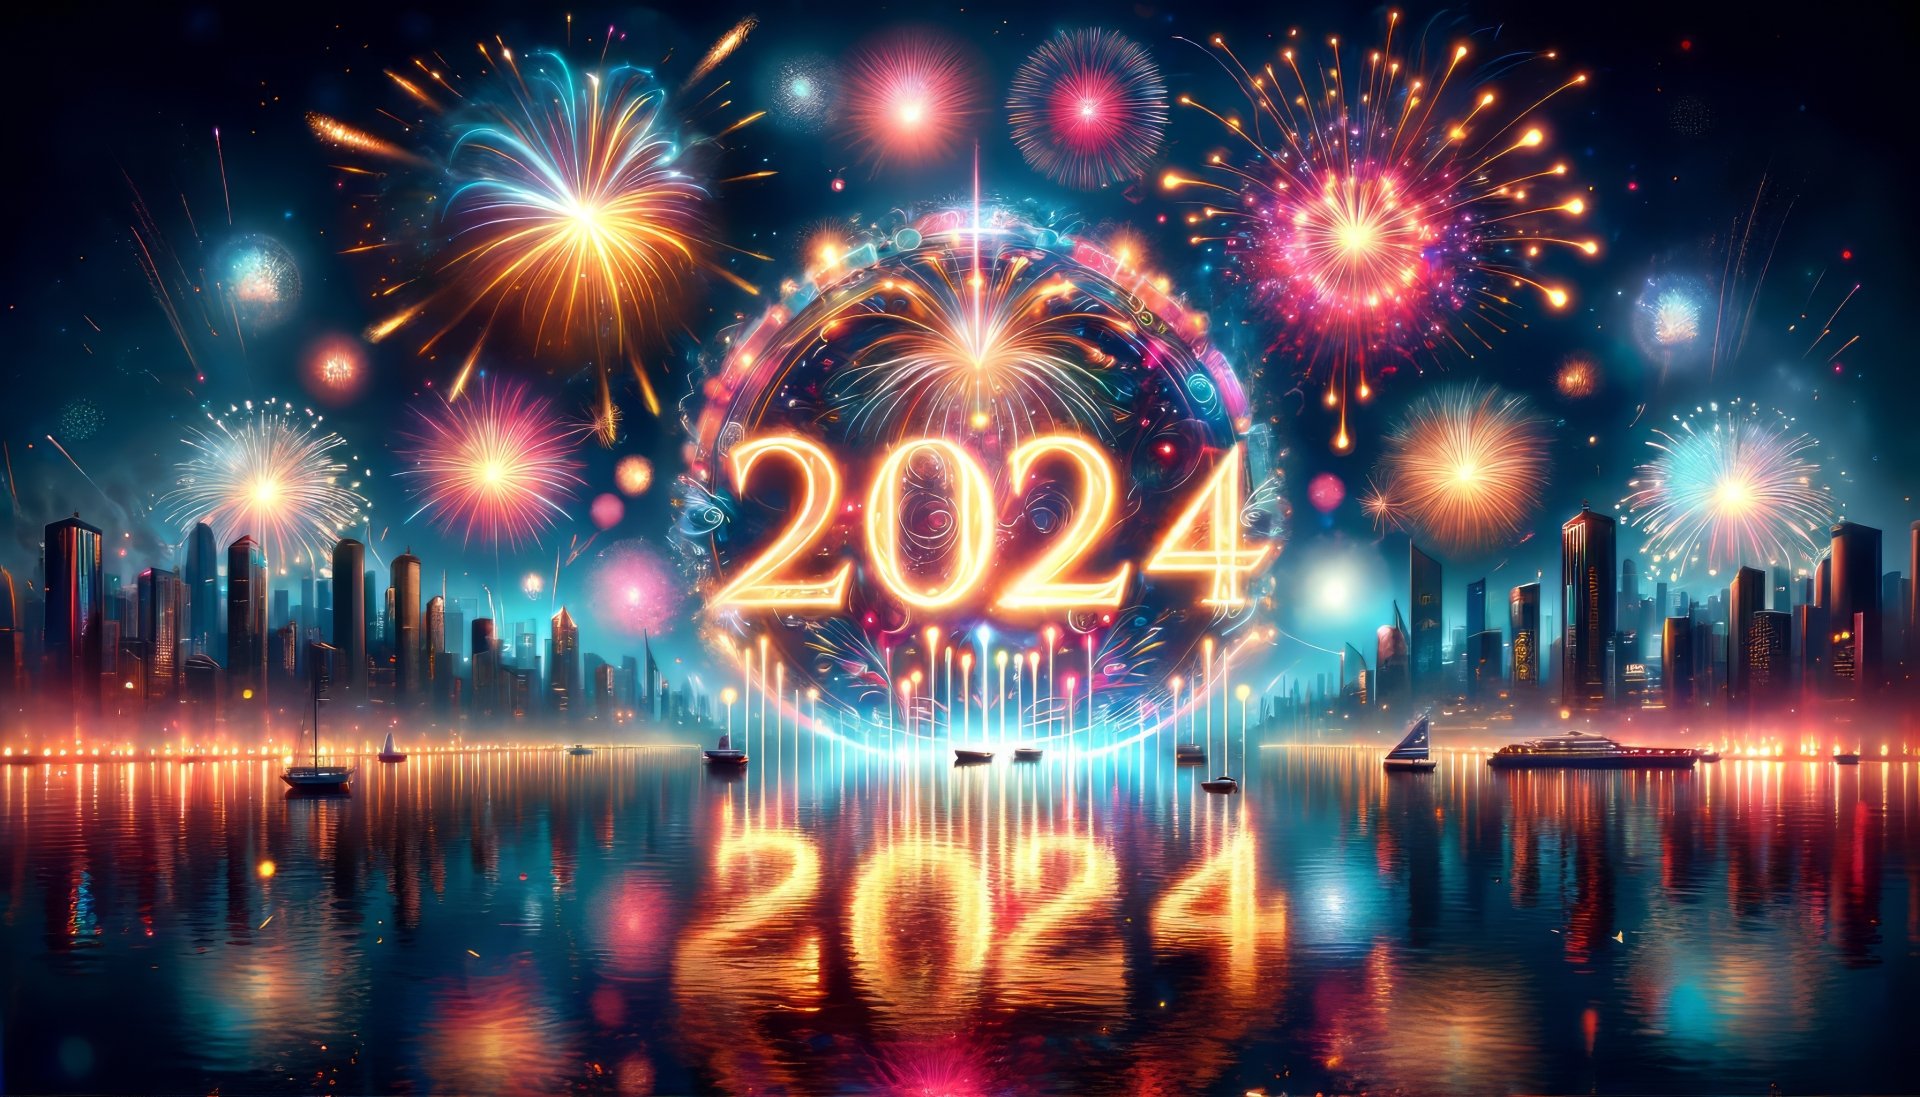 2024 Fireworks Celebration HD Wallpaper by patrika